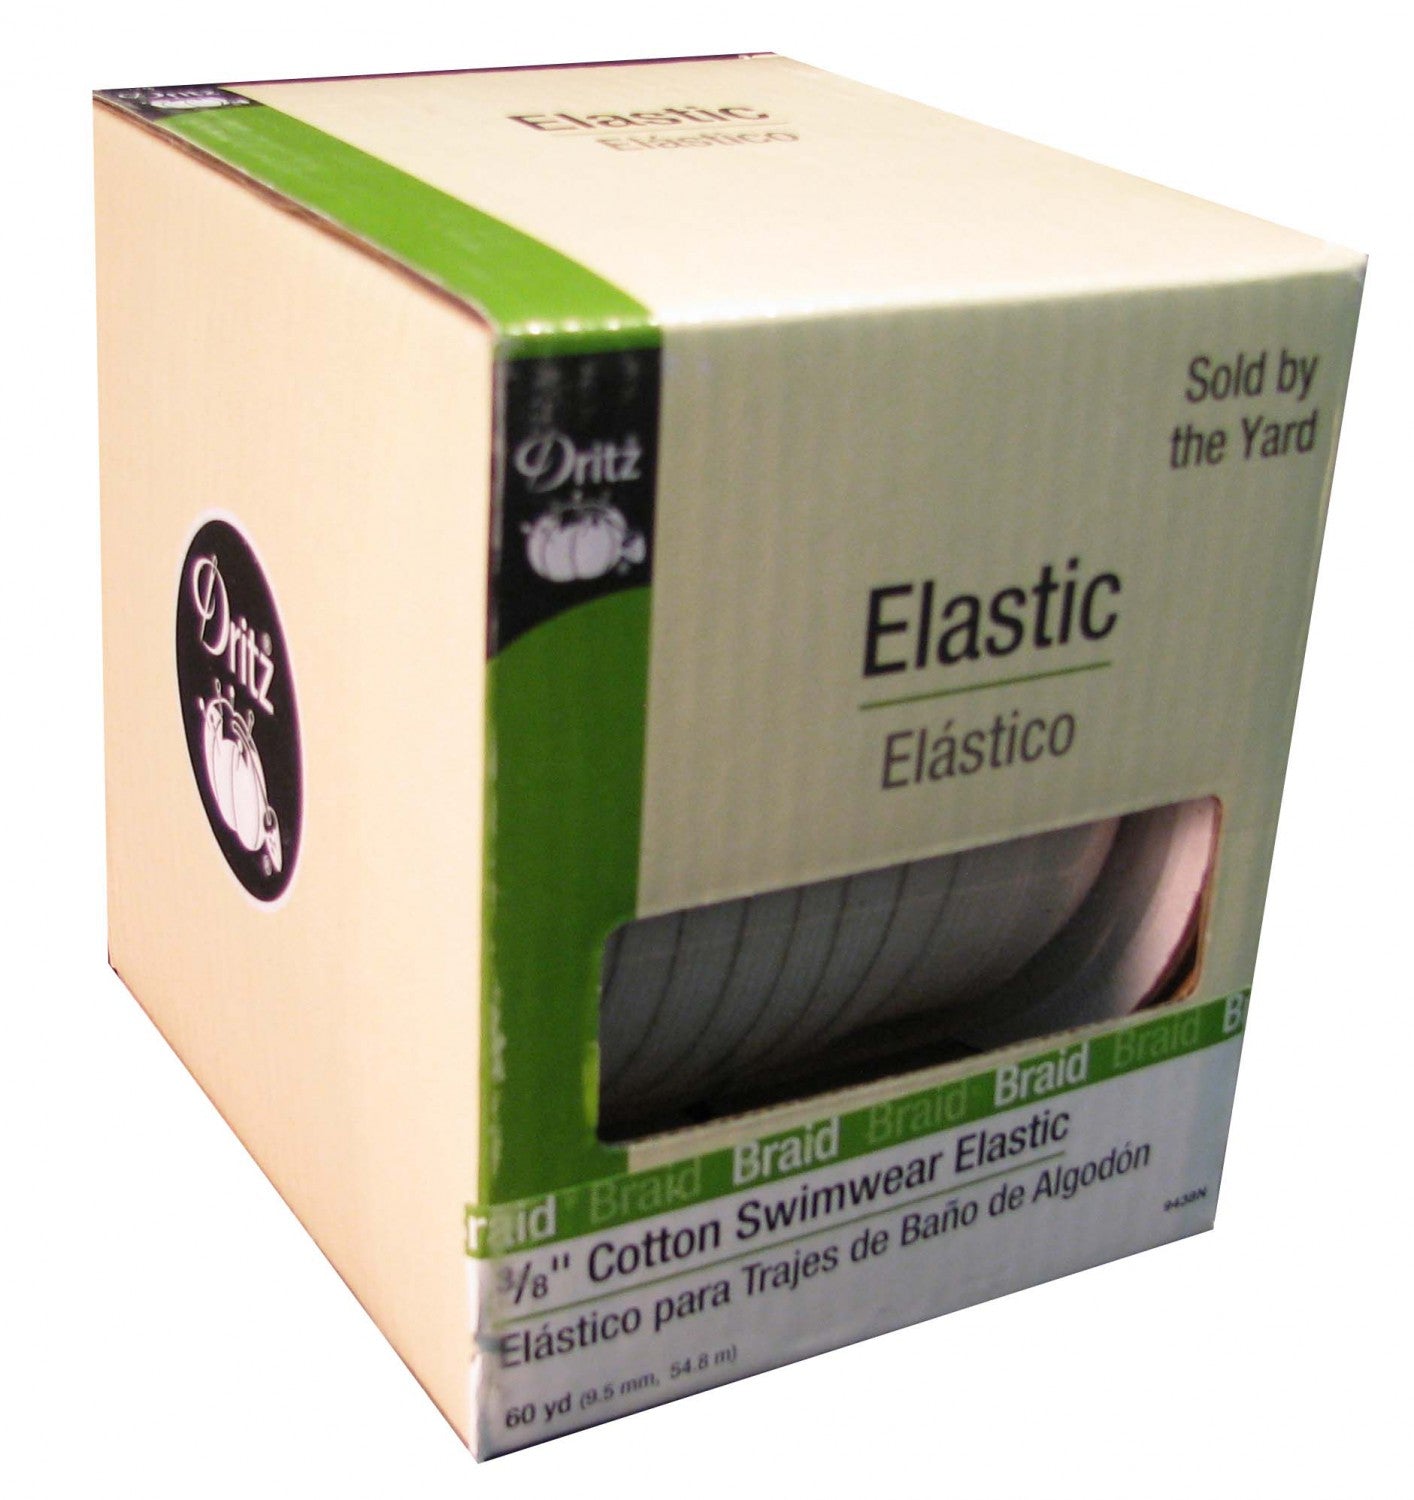 Elastic - 3/8" Cotton Swimwear Elastic